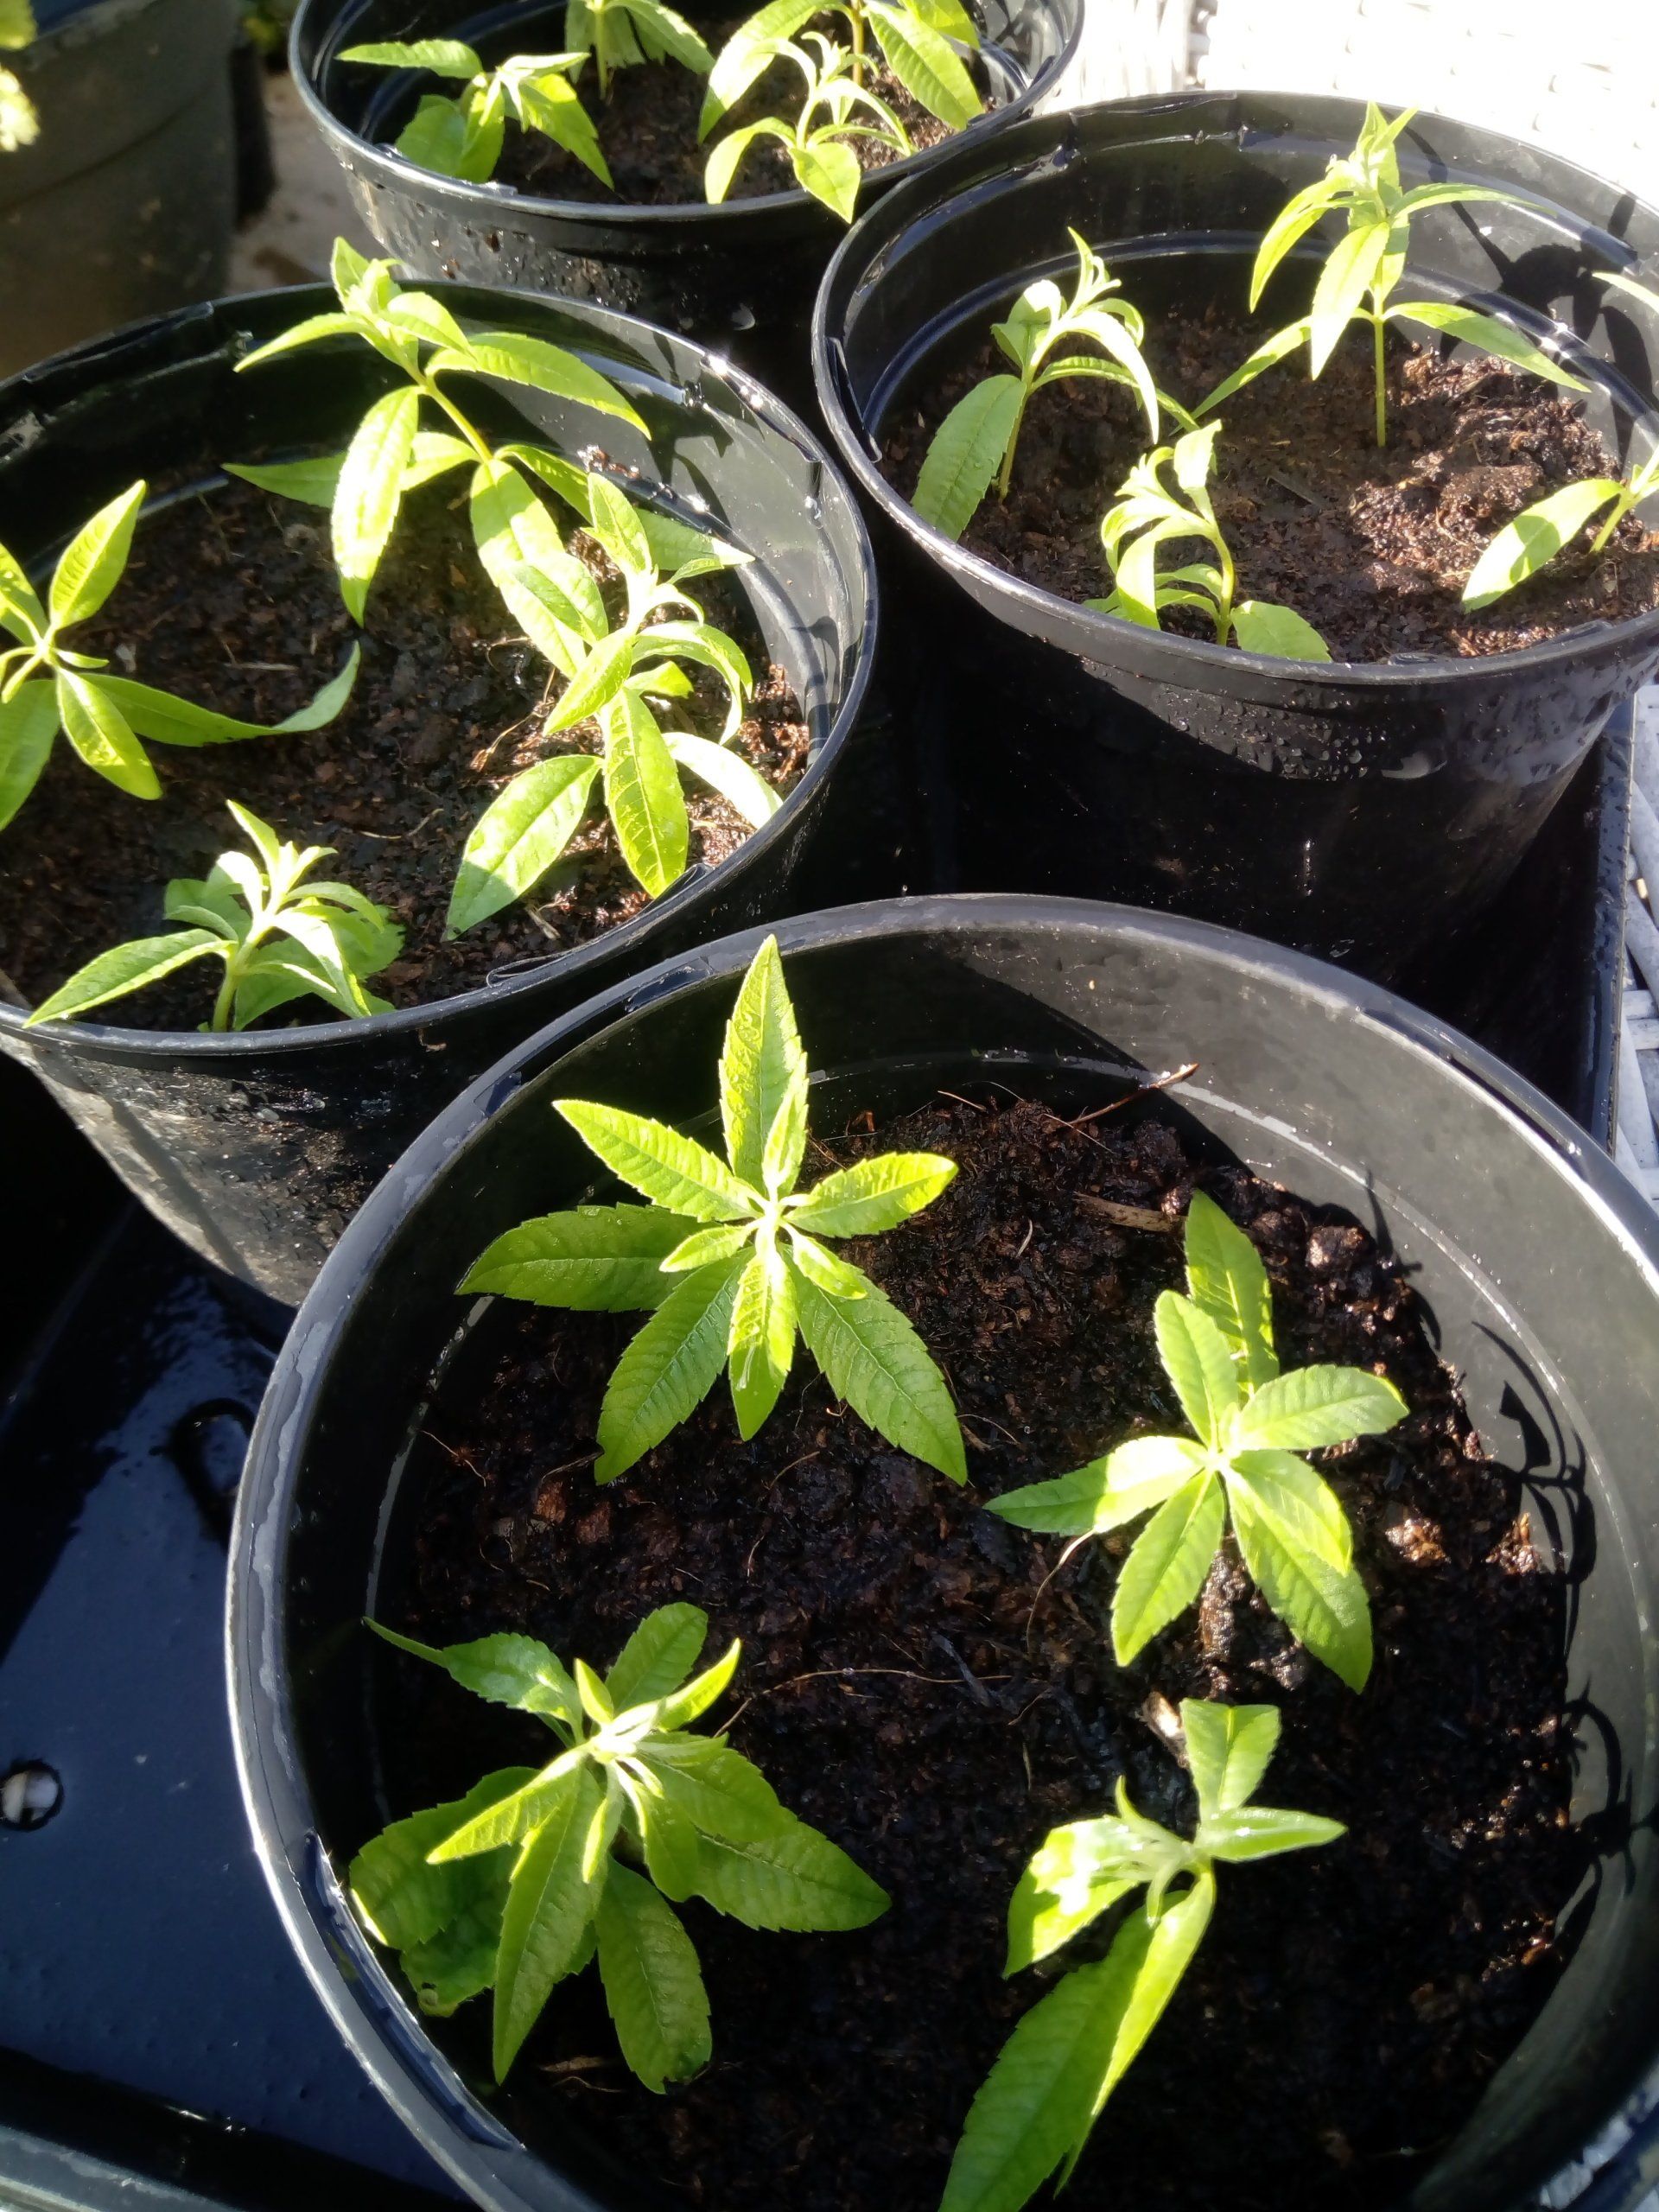 Well watered pots of Lemon Verbena or Aloysia citrodora cuttings